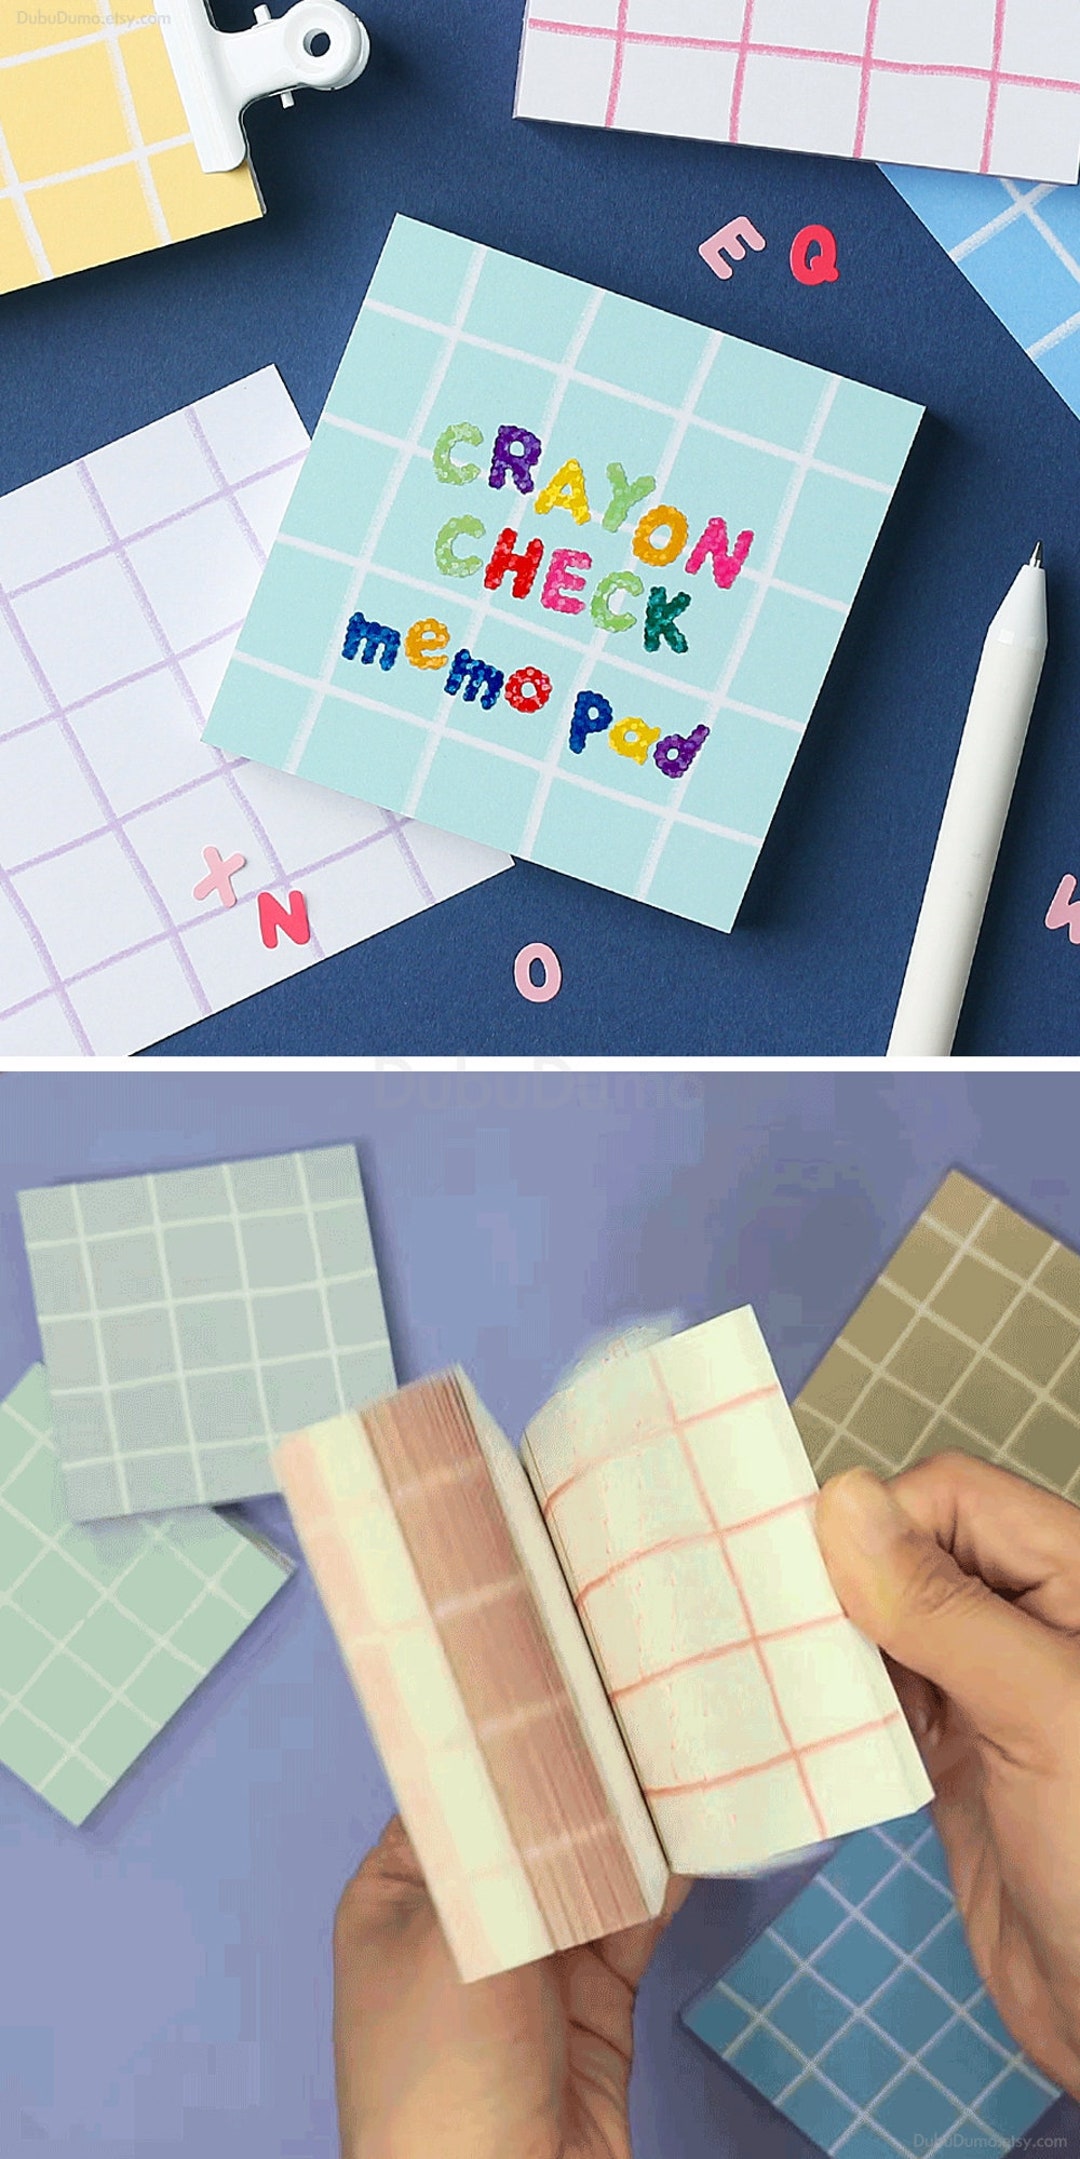 Memo Pad 12types / Colorful Notepad / Writing Paper Memo Pad / Korean  Stationery / Scrapbooking / Christmas Gift / Journal / Pink 